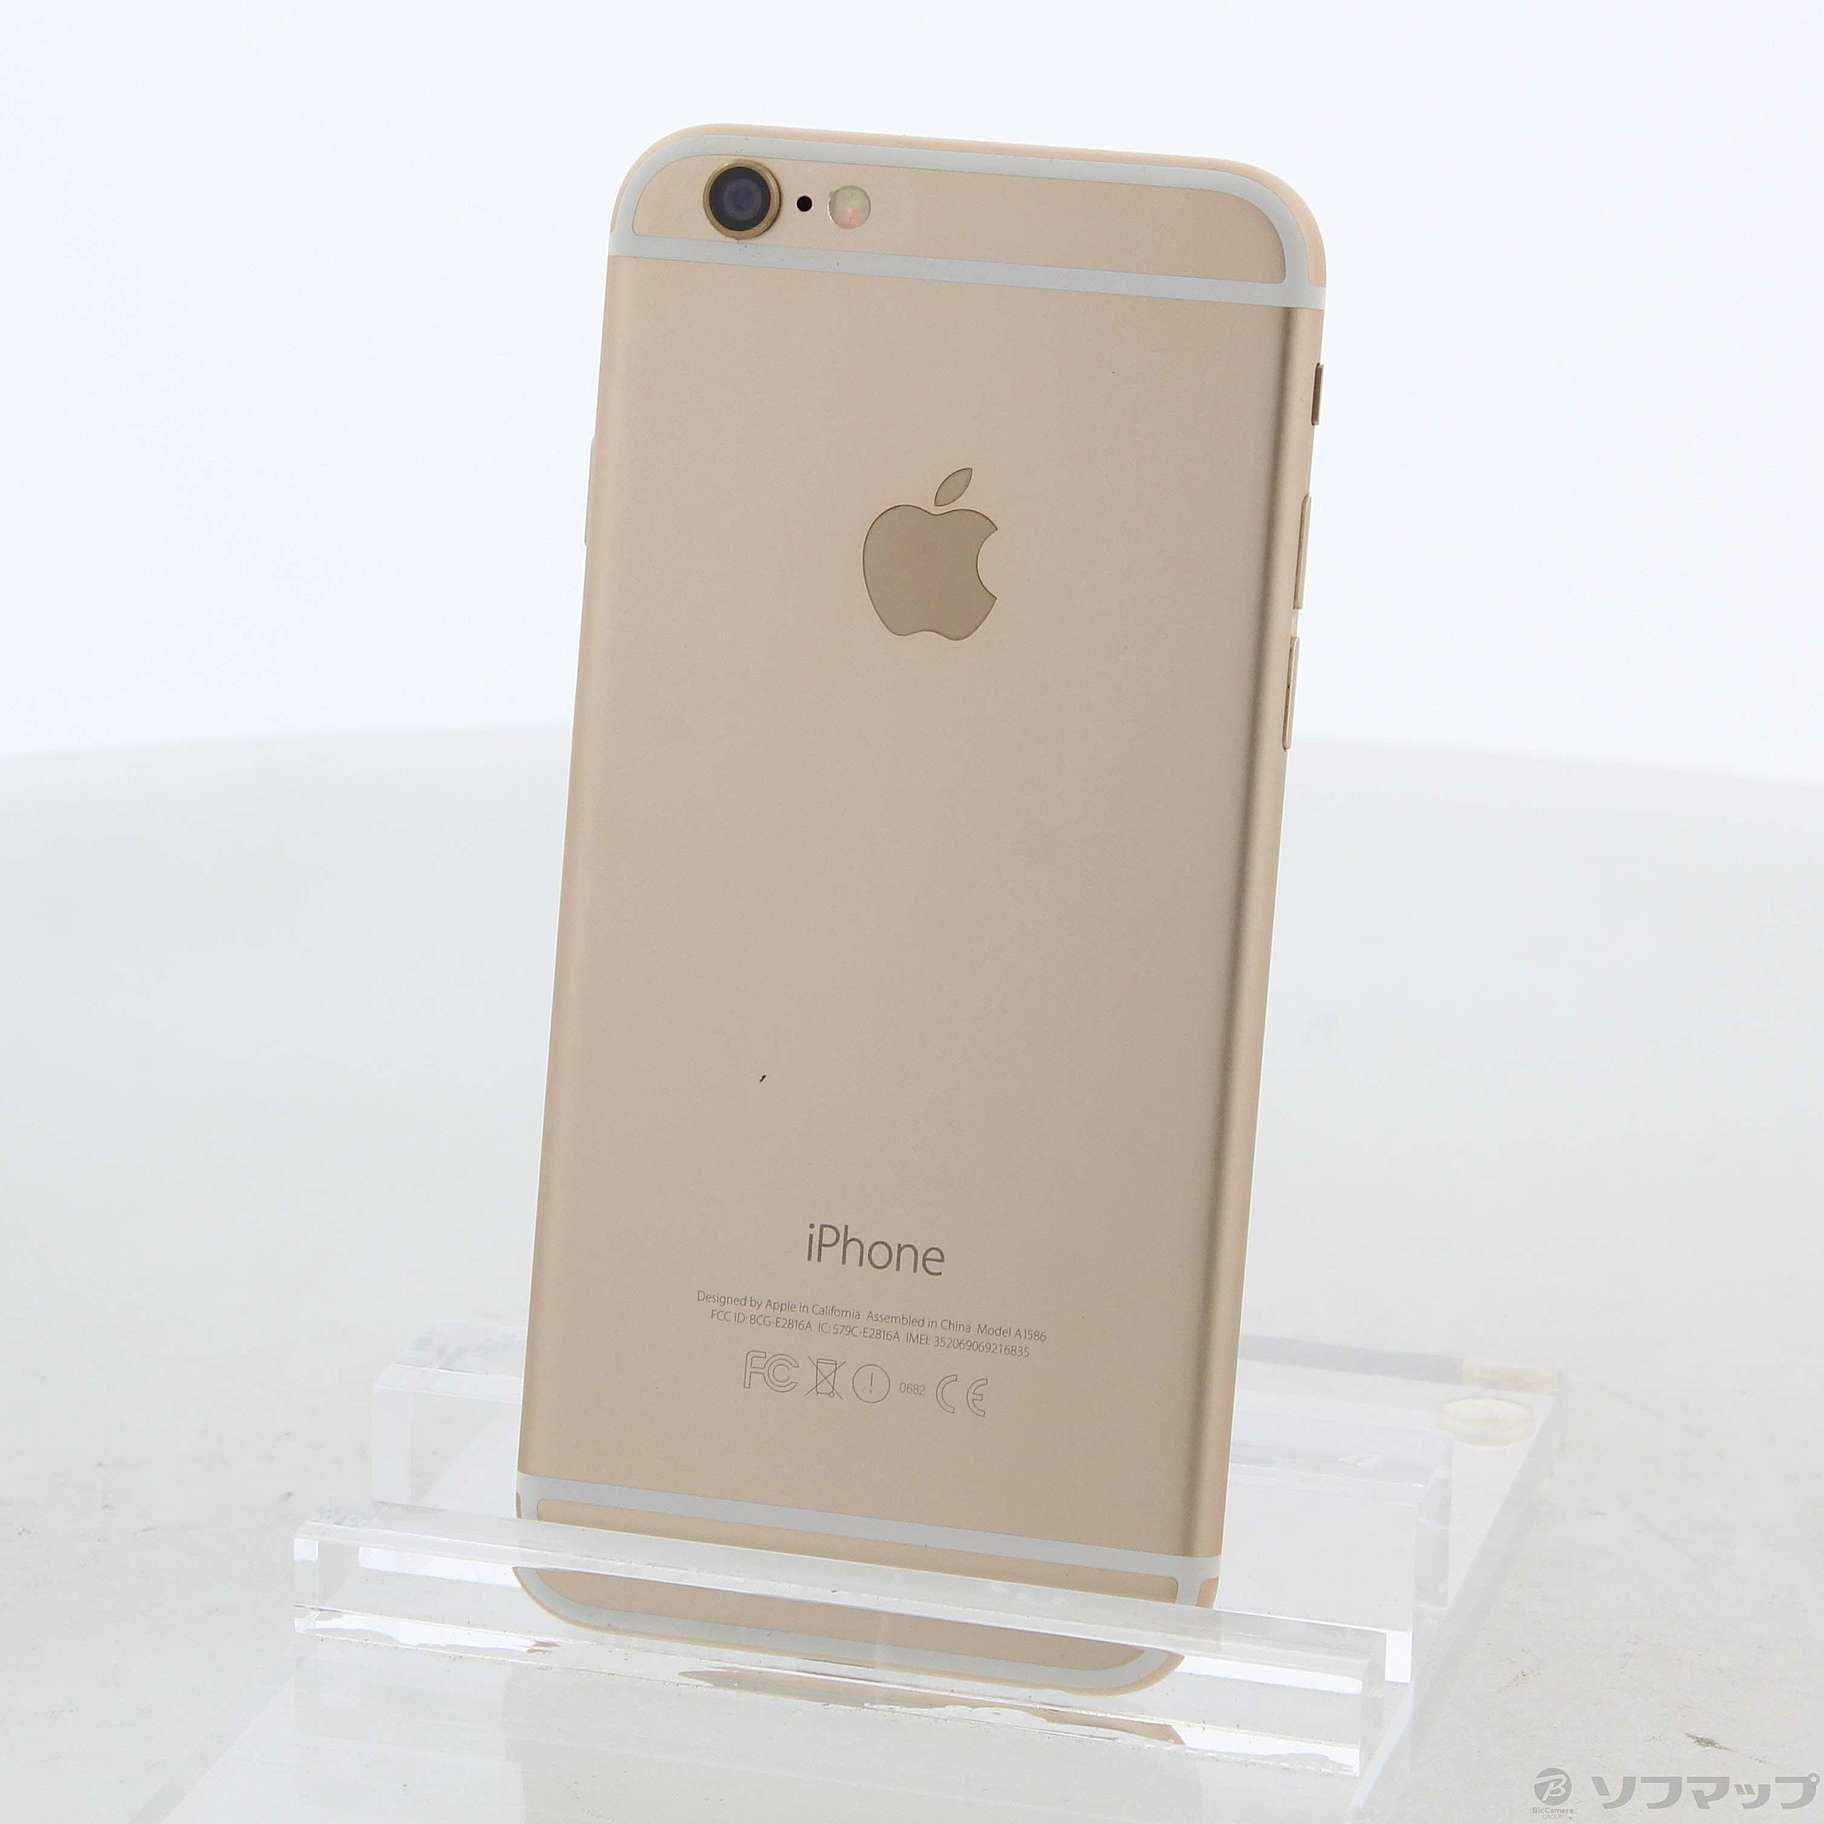 iPhone Gold 16 GB Softbank